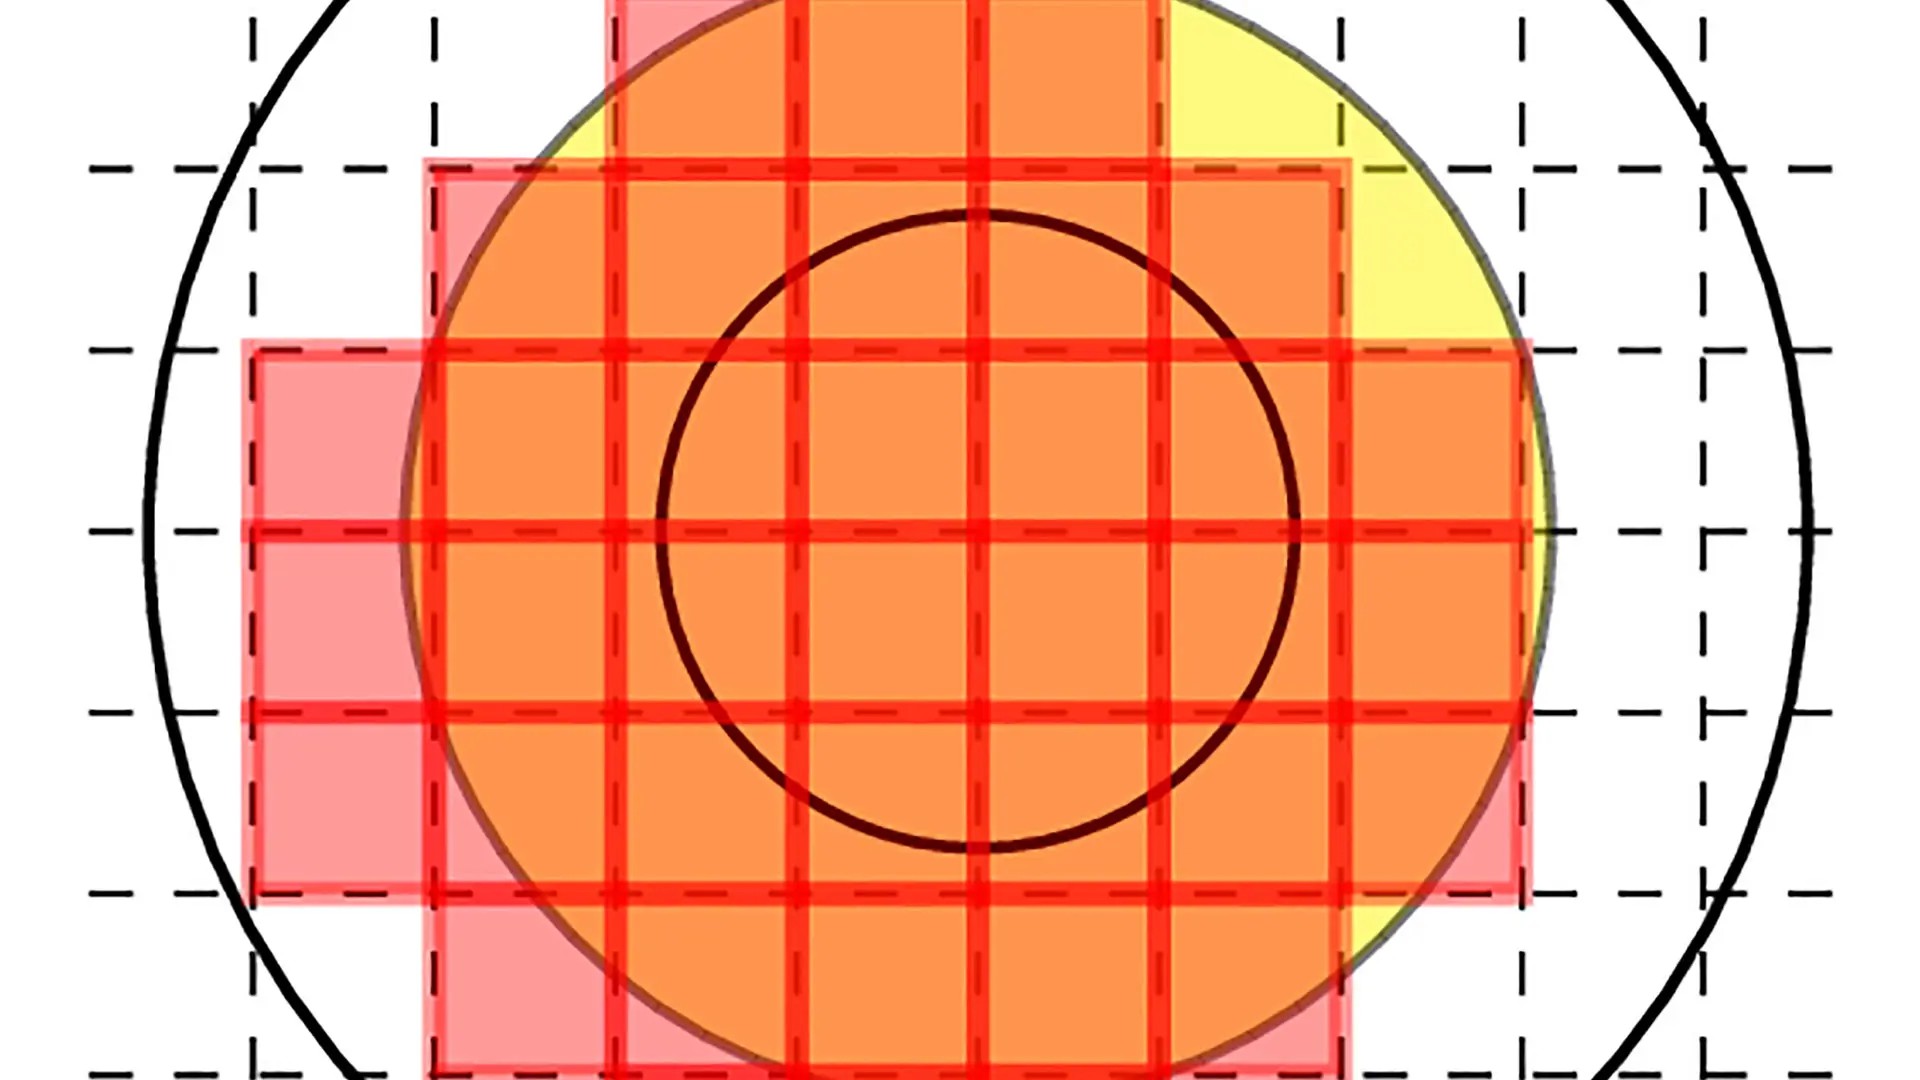 Figur som visar gitterpunkter i cirklar.